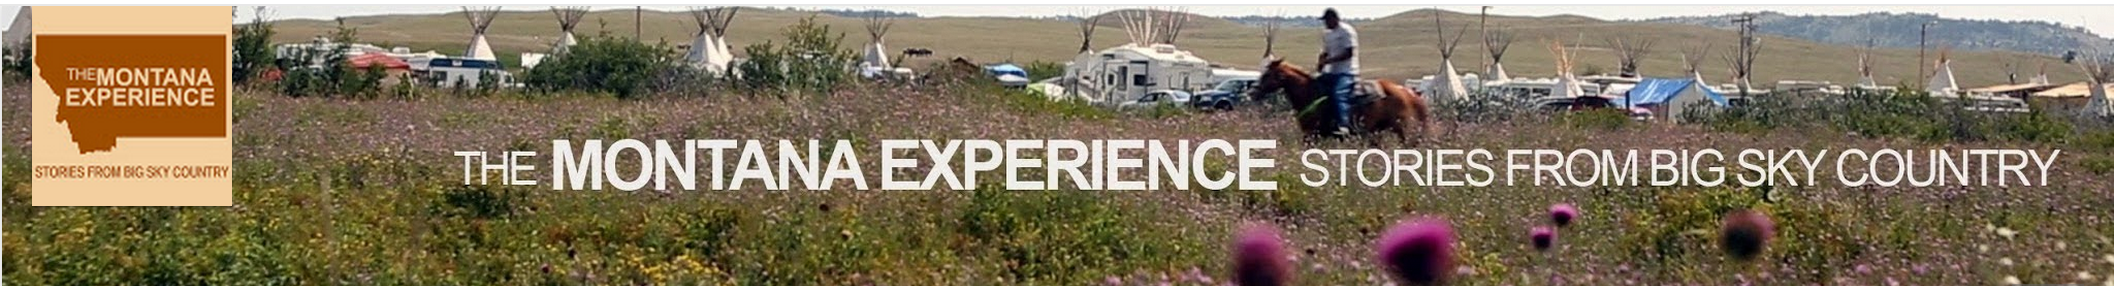 montana_experience